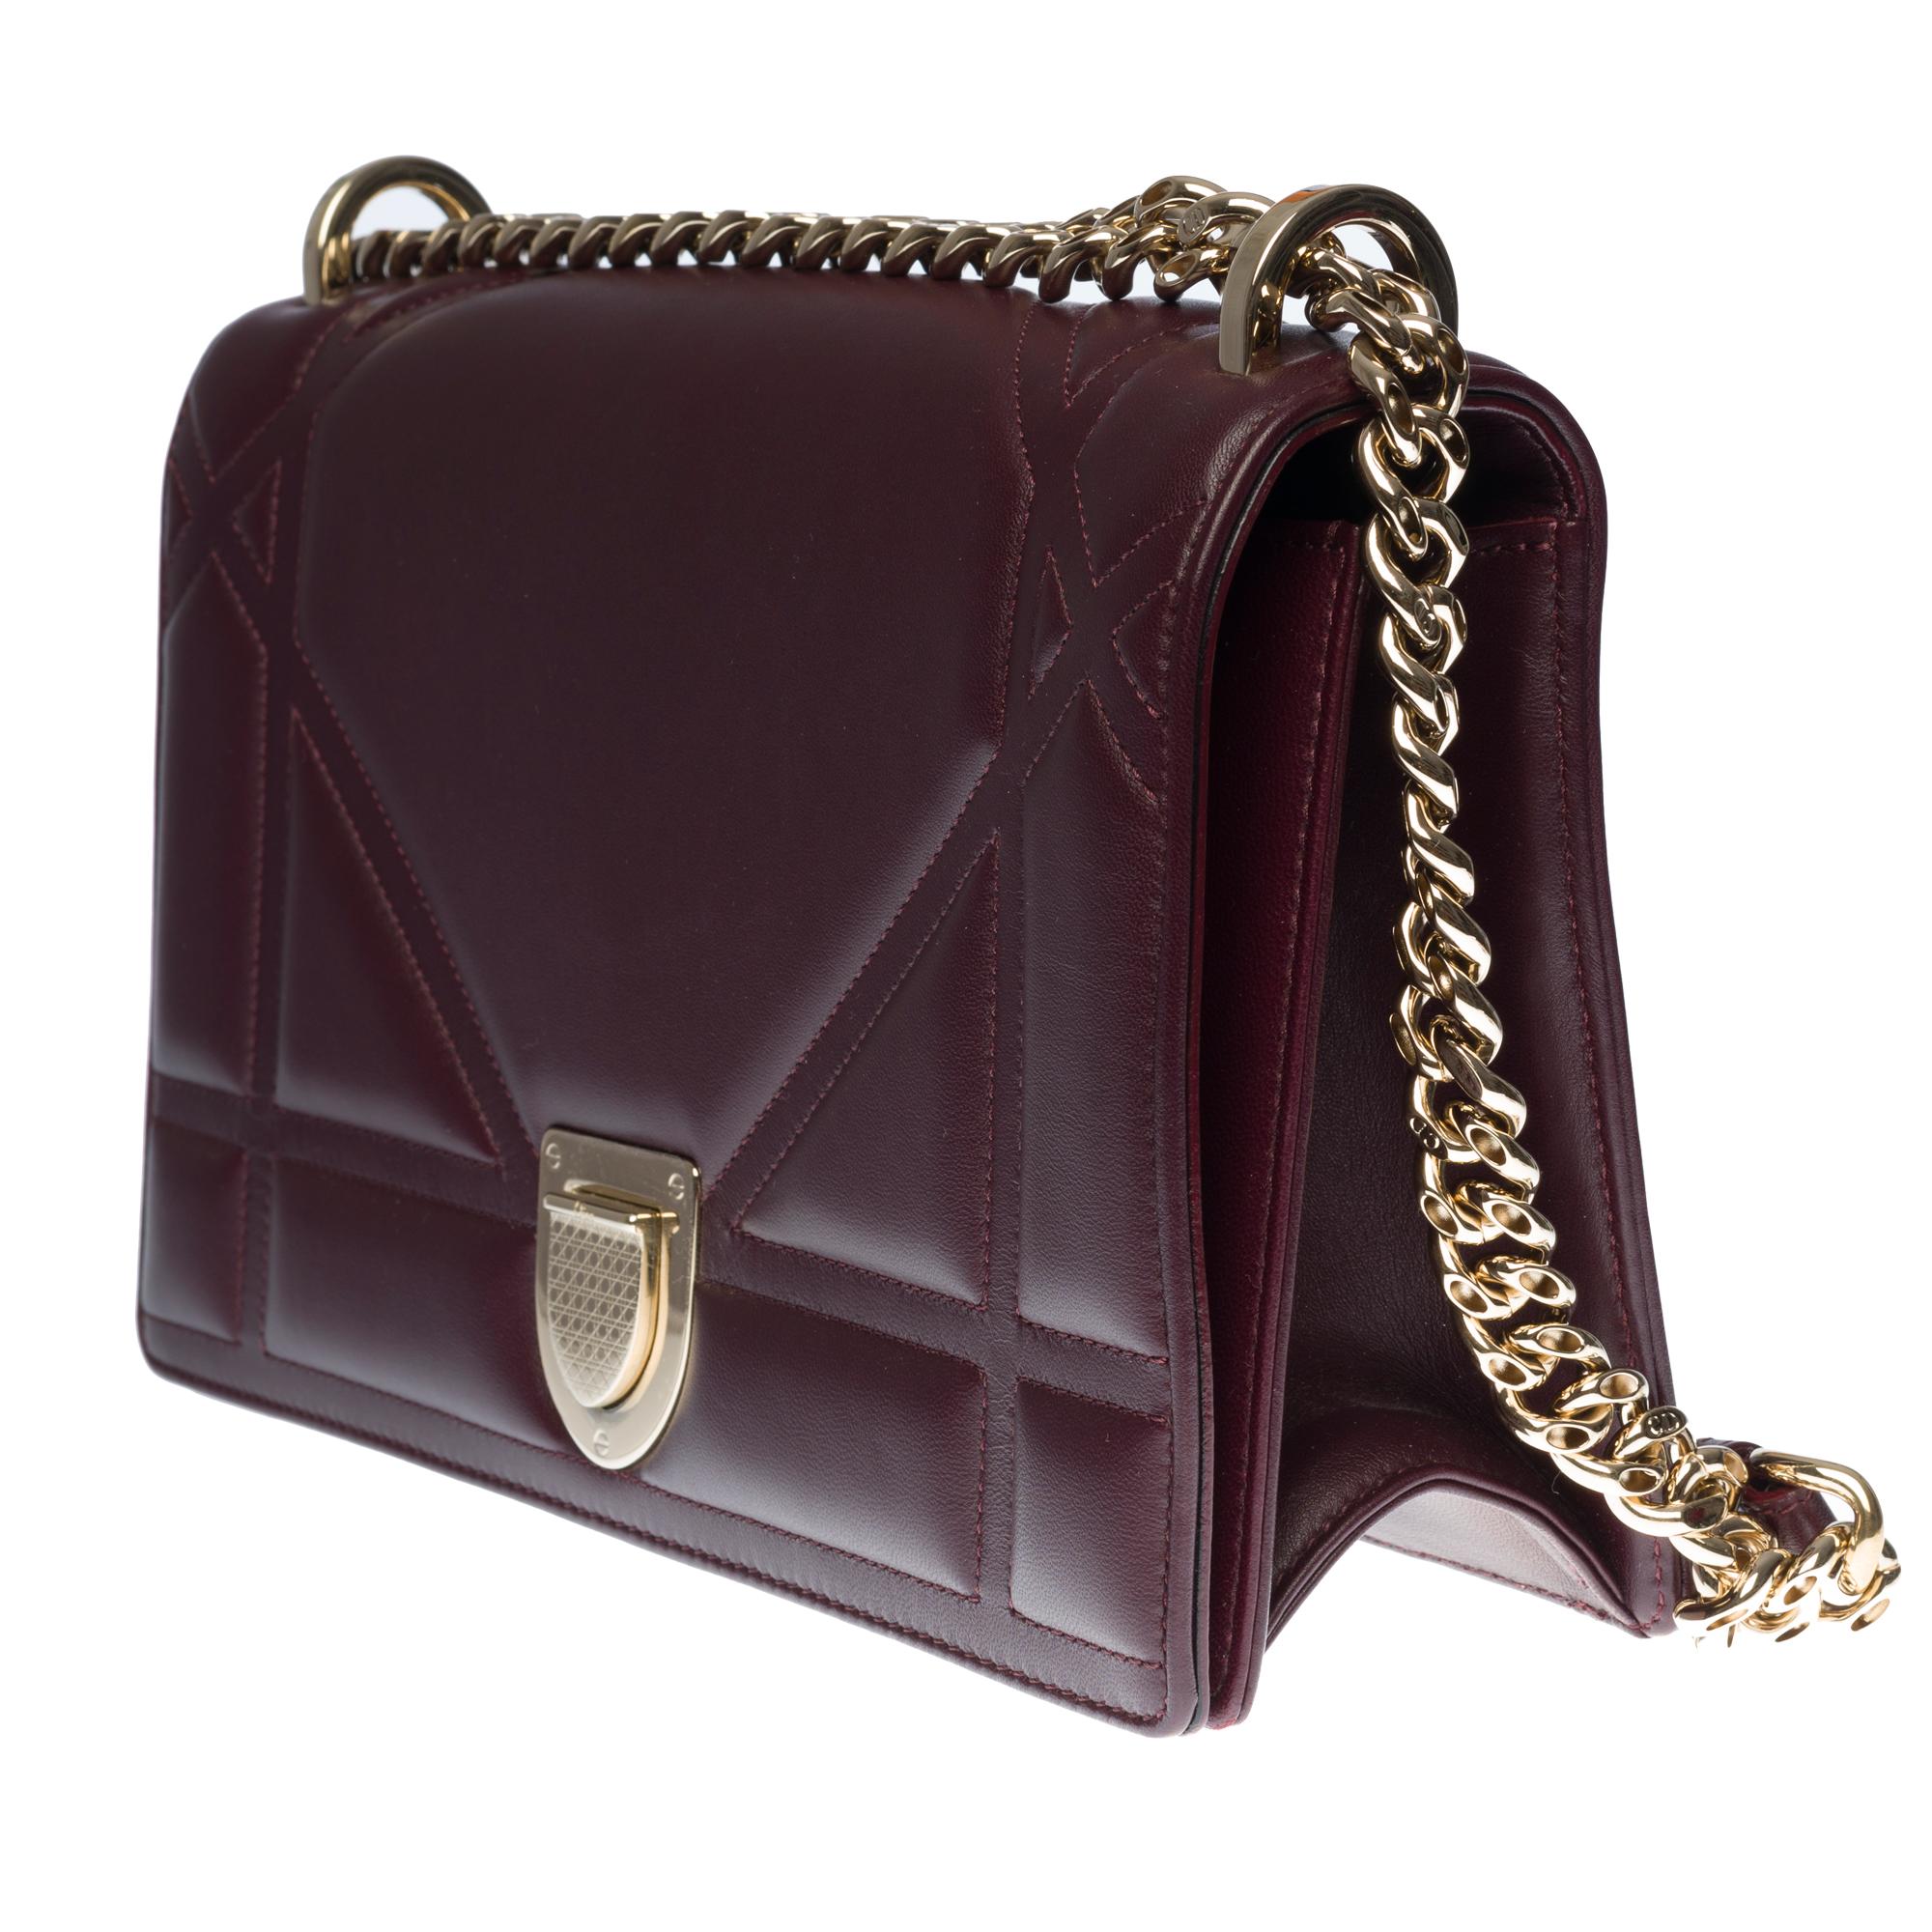 Black Brand New /Christian Dior Diorama Shoulder bag in Purple cannage leather, SHW